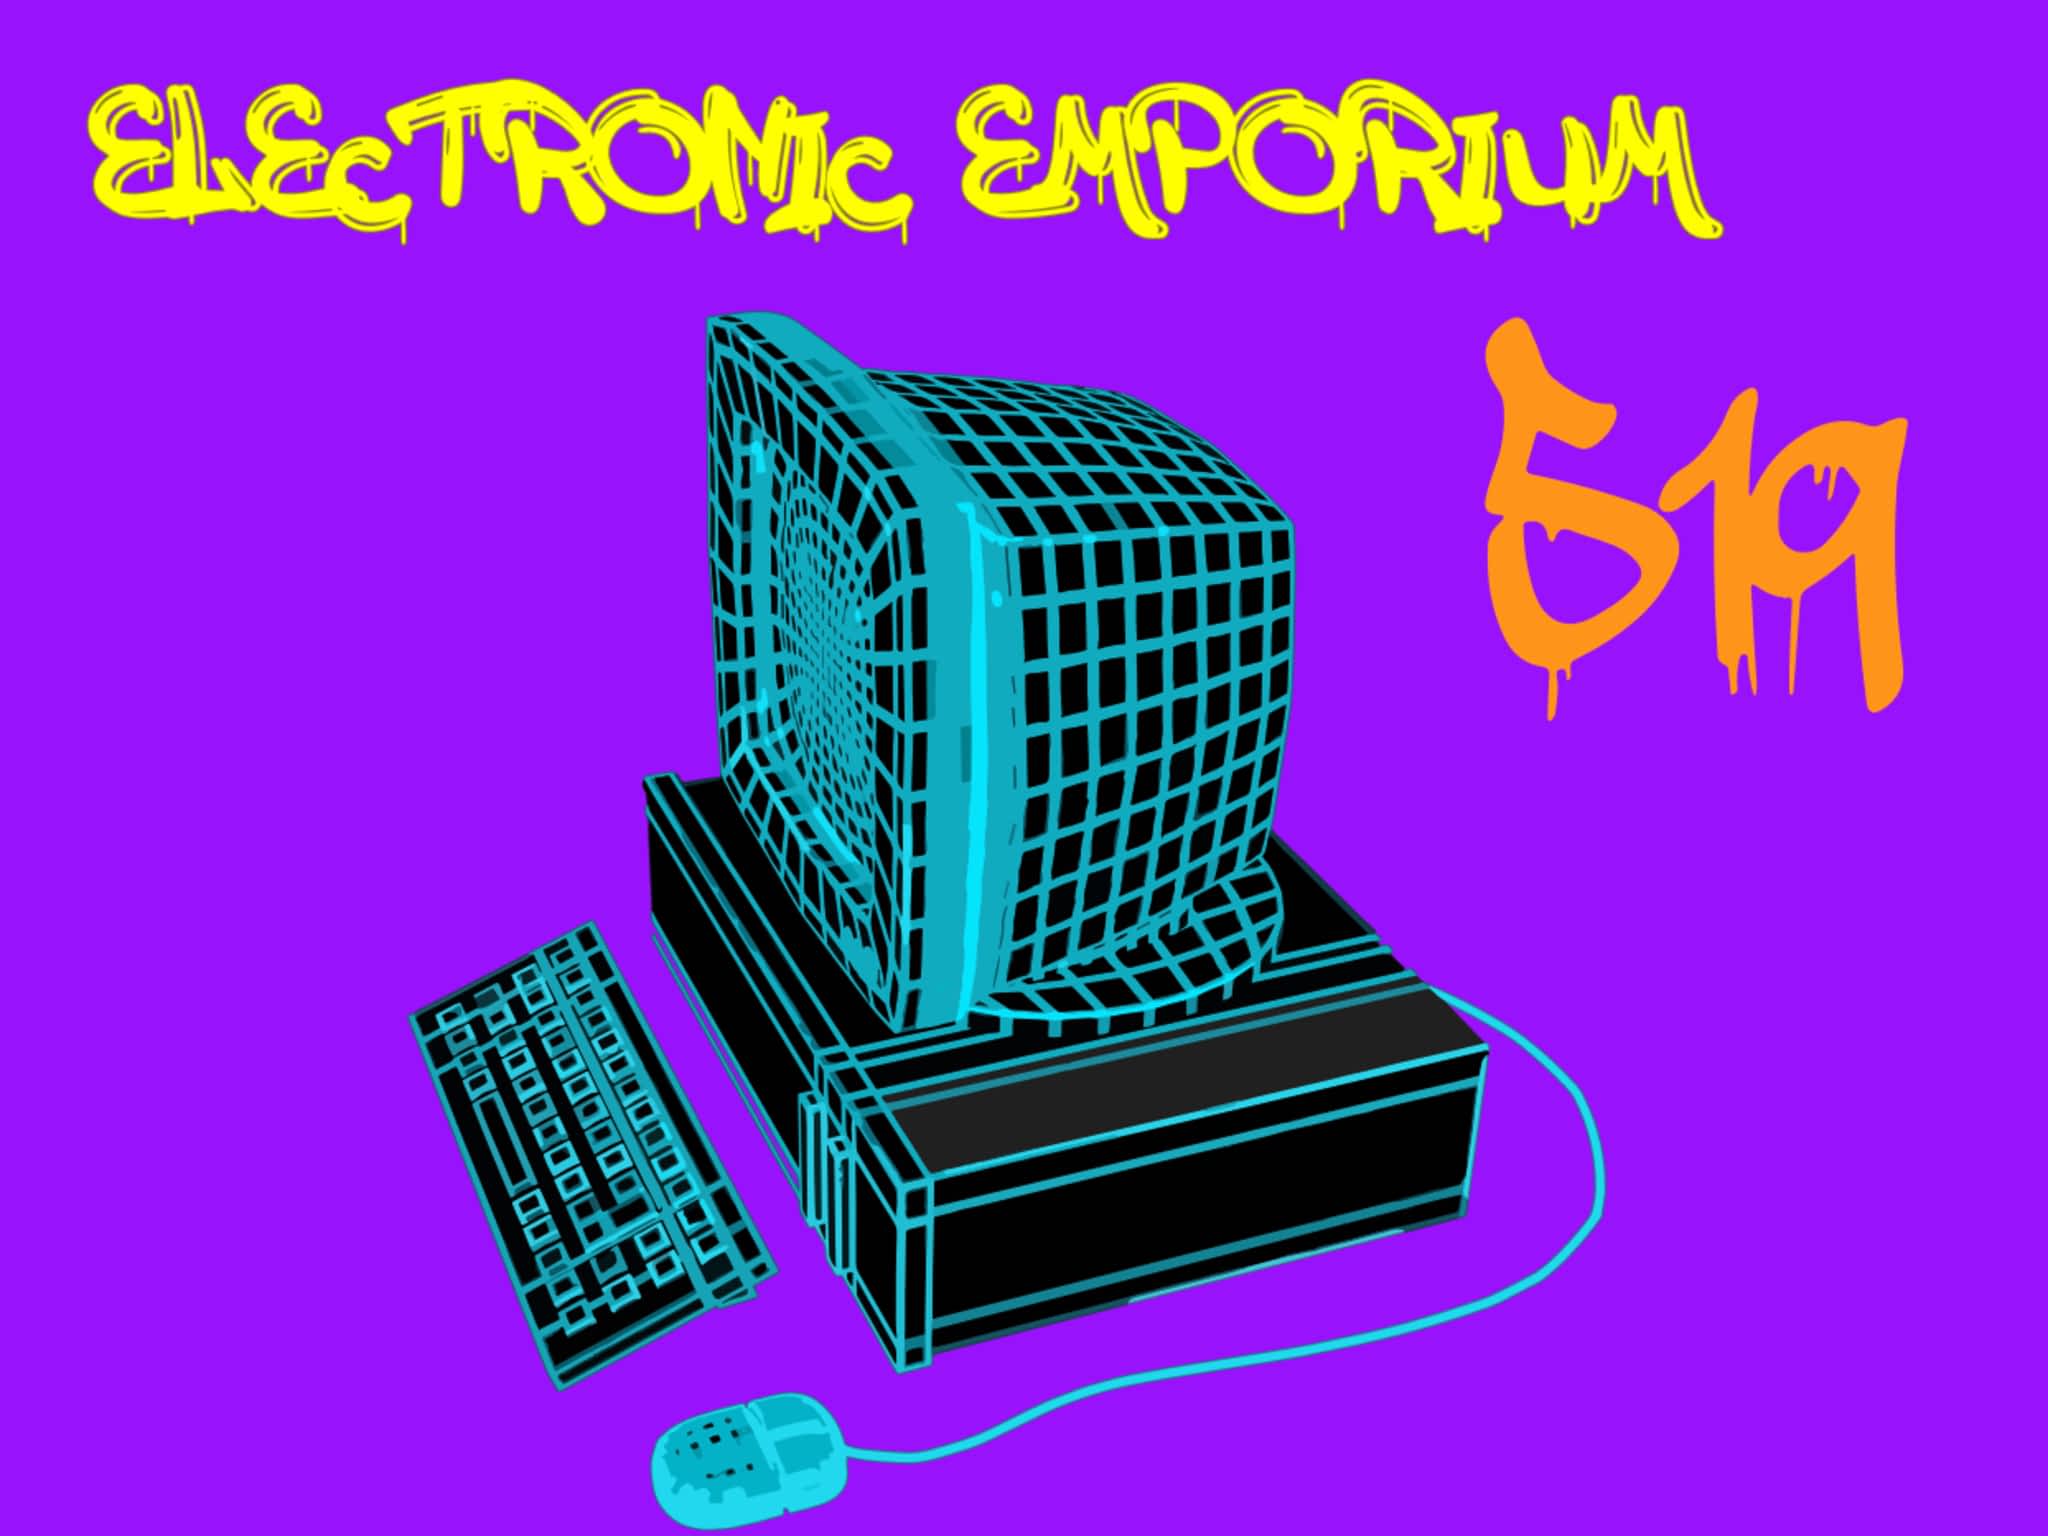 photo Electronic Emporium 519